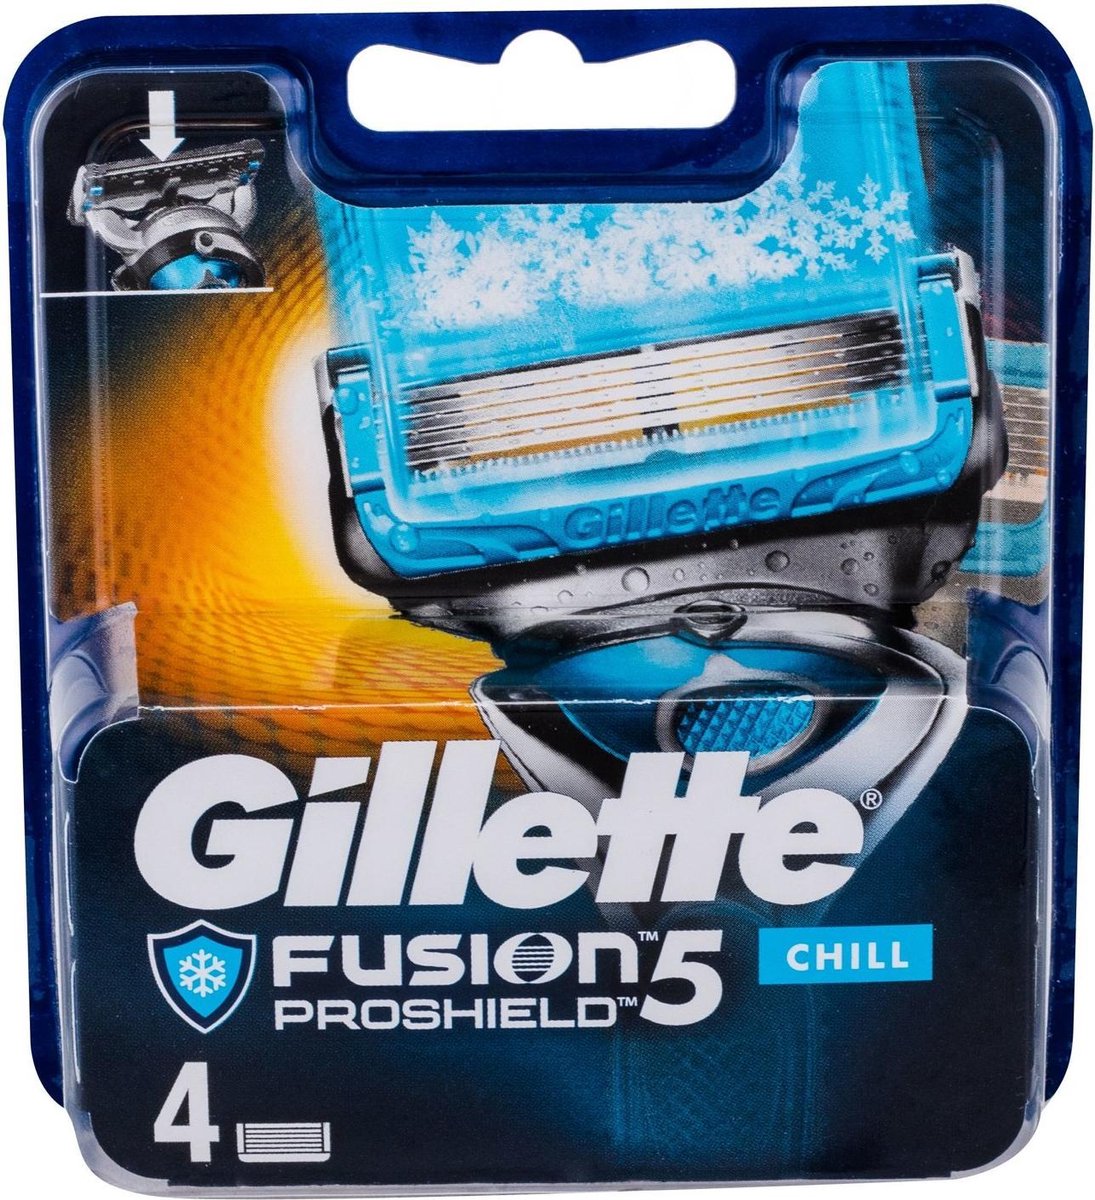 Gillette Fusion Proshield Chill 4 Stuks - Gillette